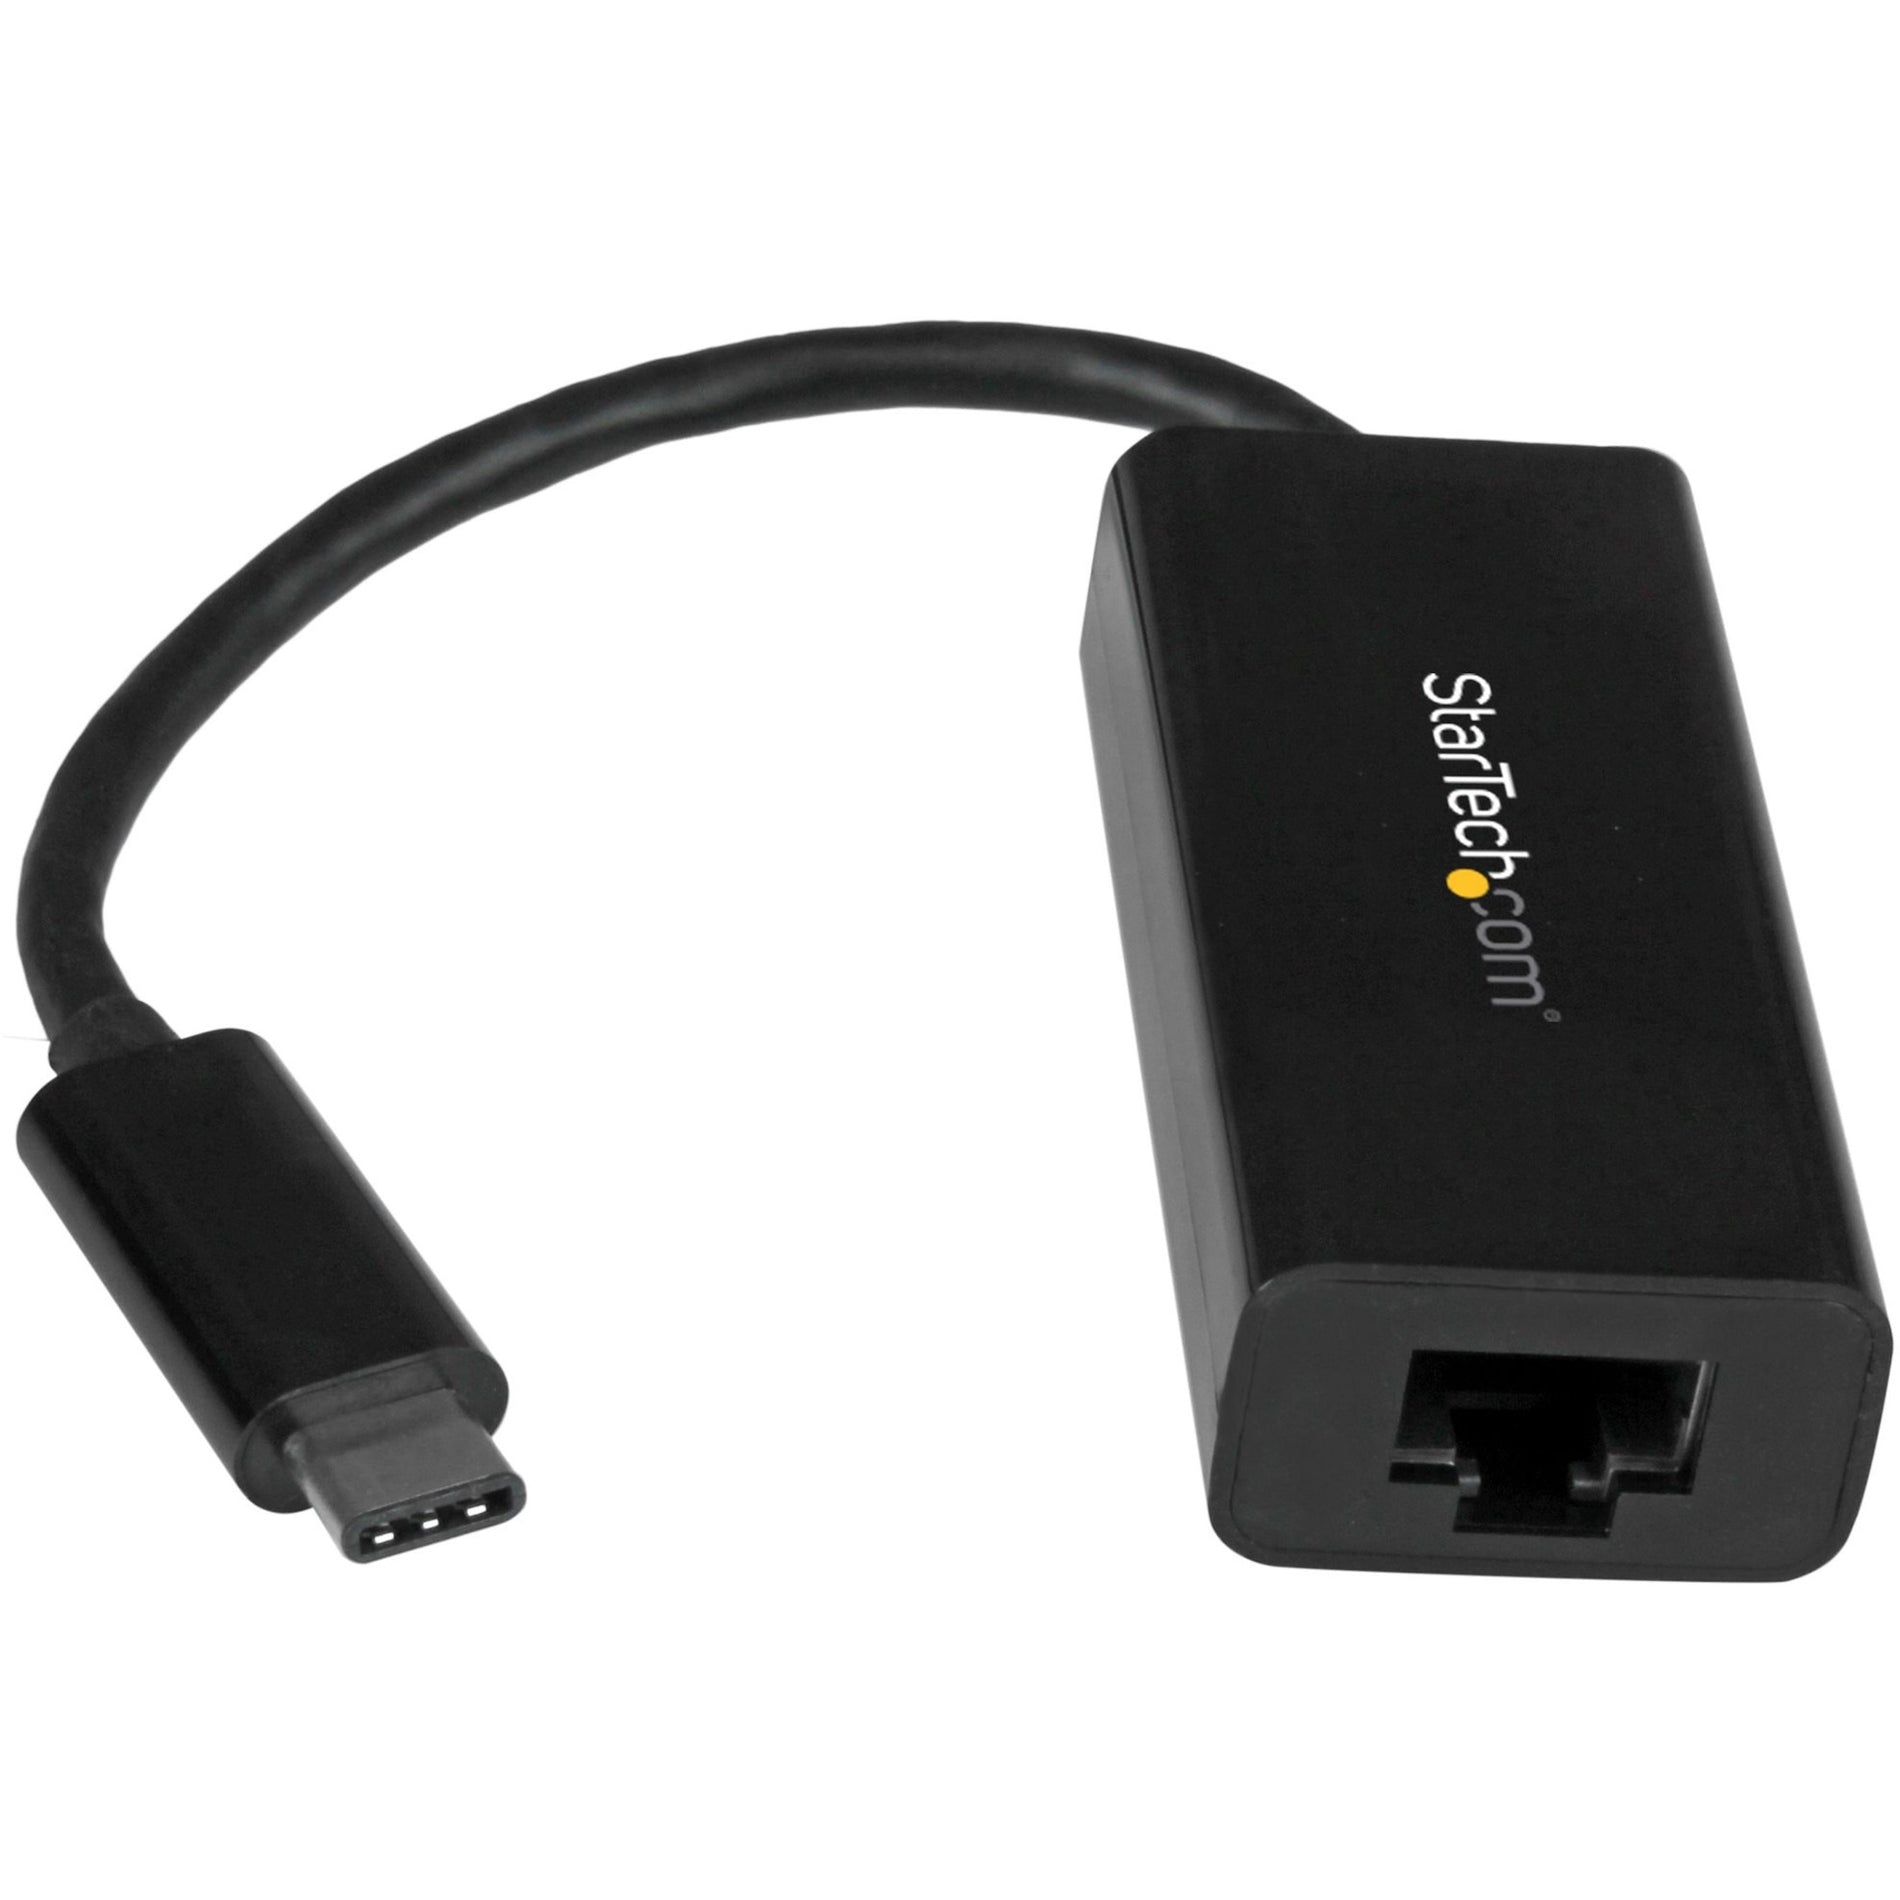 StarTech.com US1GC30B USB-C to Gigabit Ethernet Adapter, USB 3.1 Gen 1 (5 Gbps), Native Support